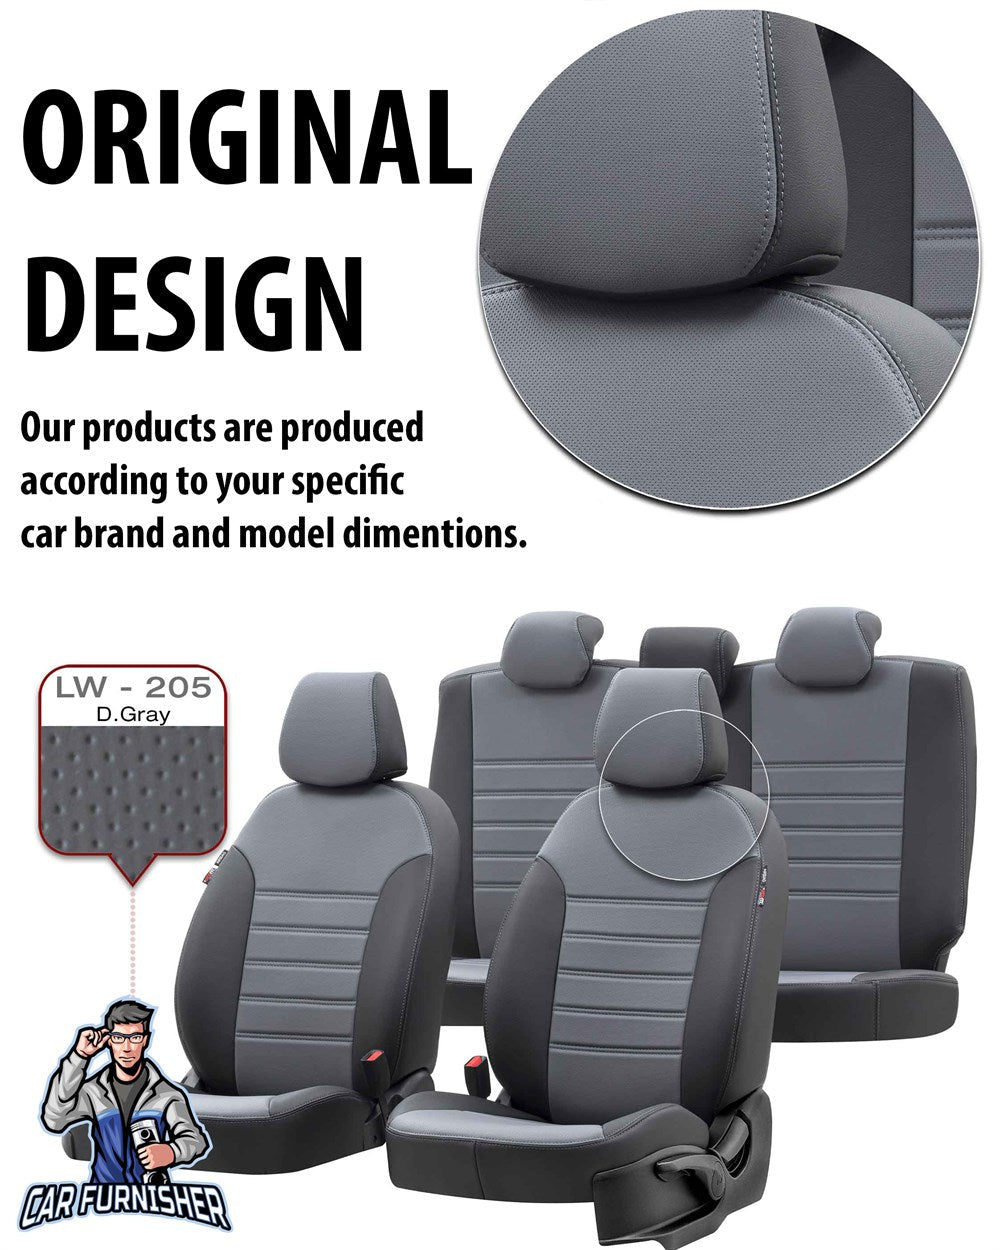 Subaru Legacy Seat Cover Istanbul Leather Design Burgundy Leather